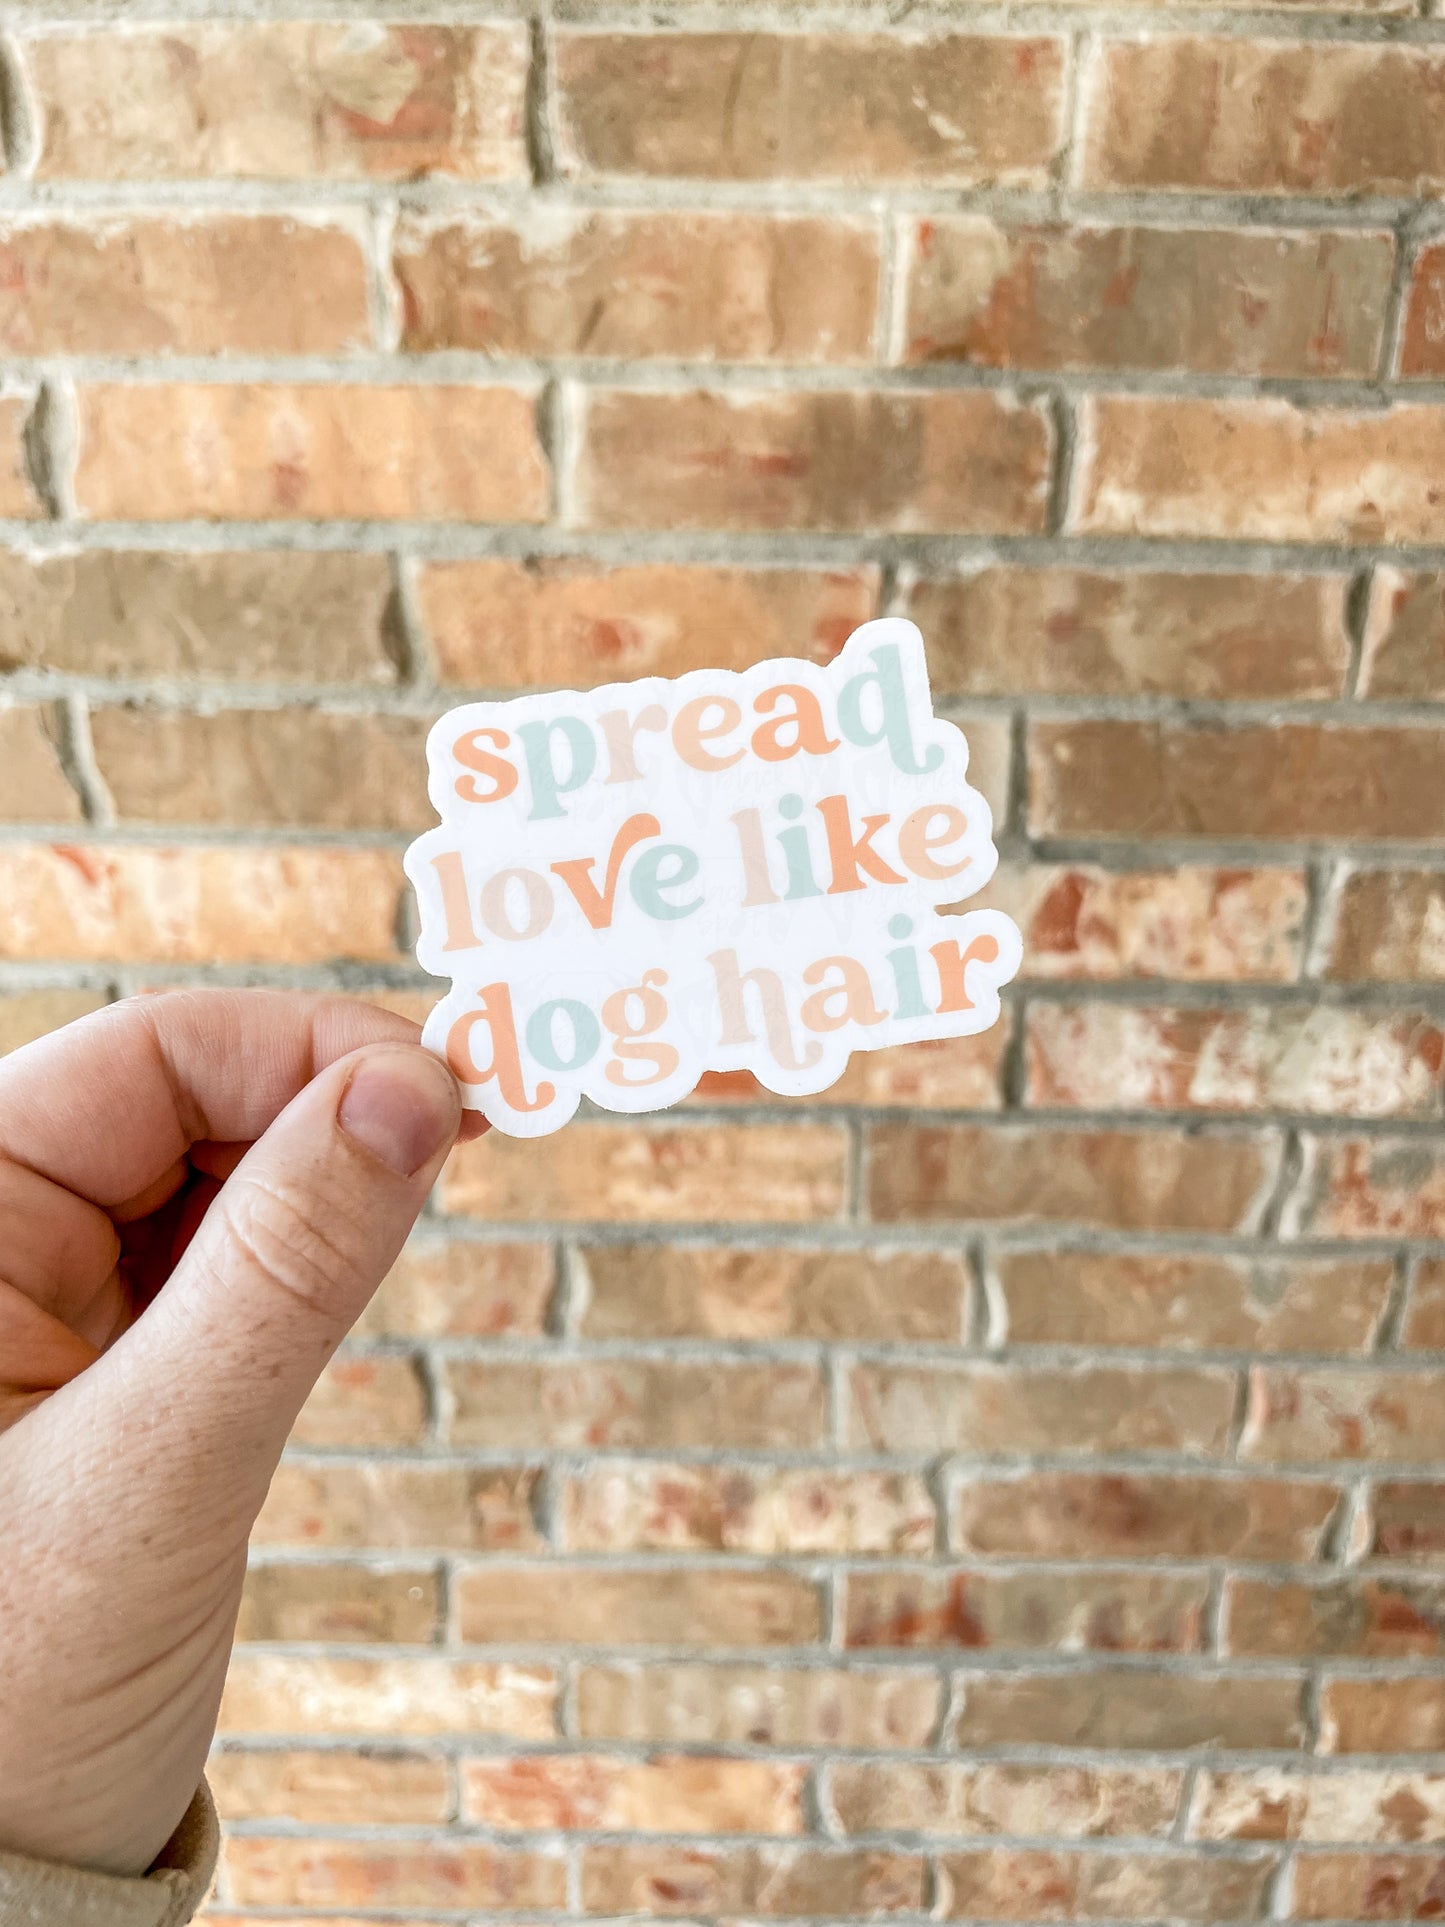 Spread Love Like Dog Hair Sticker